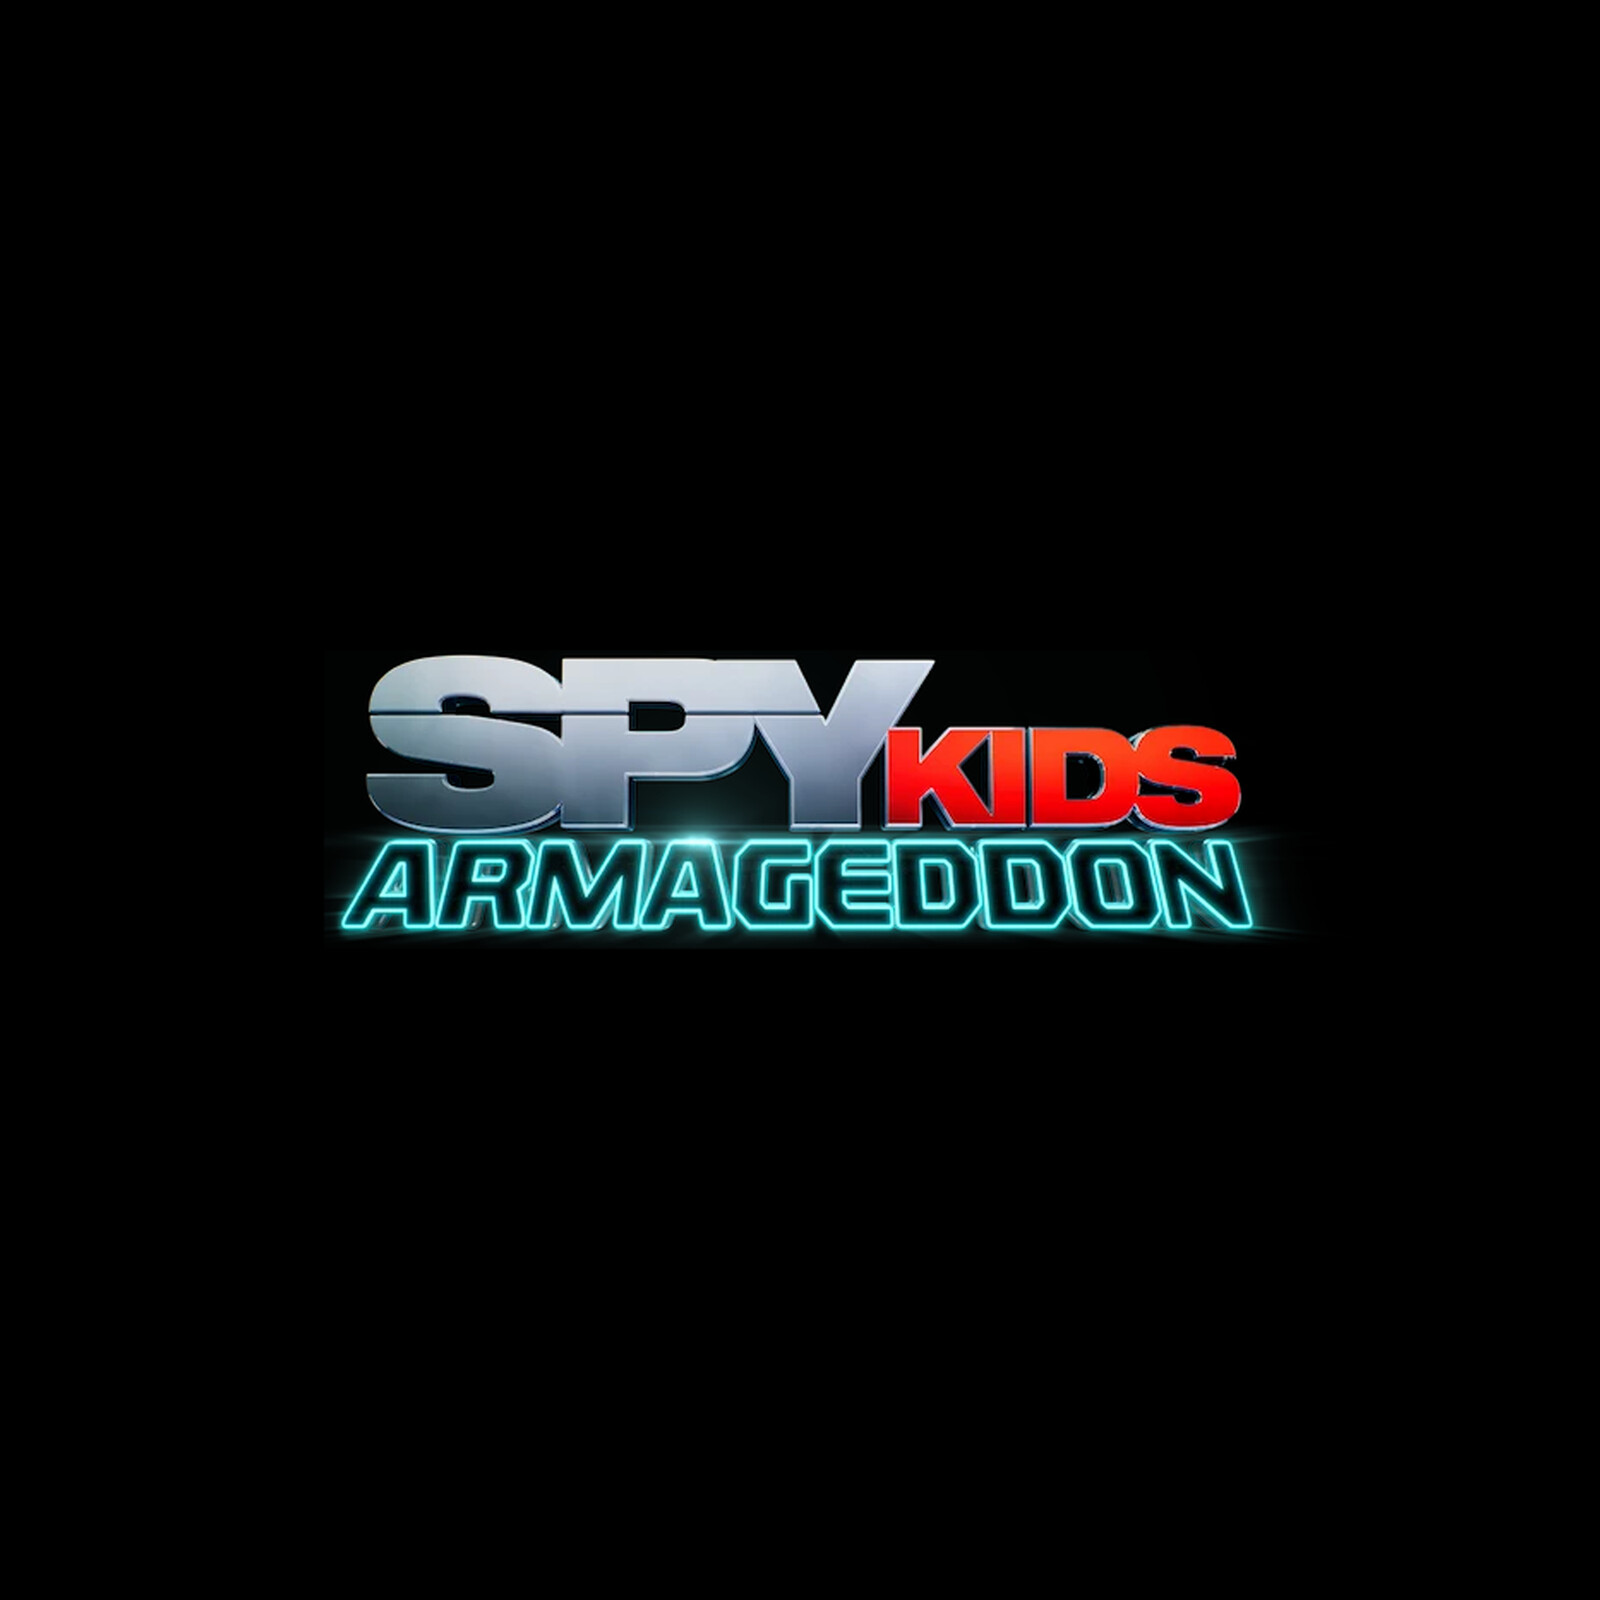 Spy Kids: Armageddon (feature film)